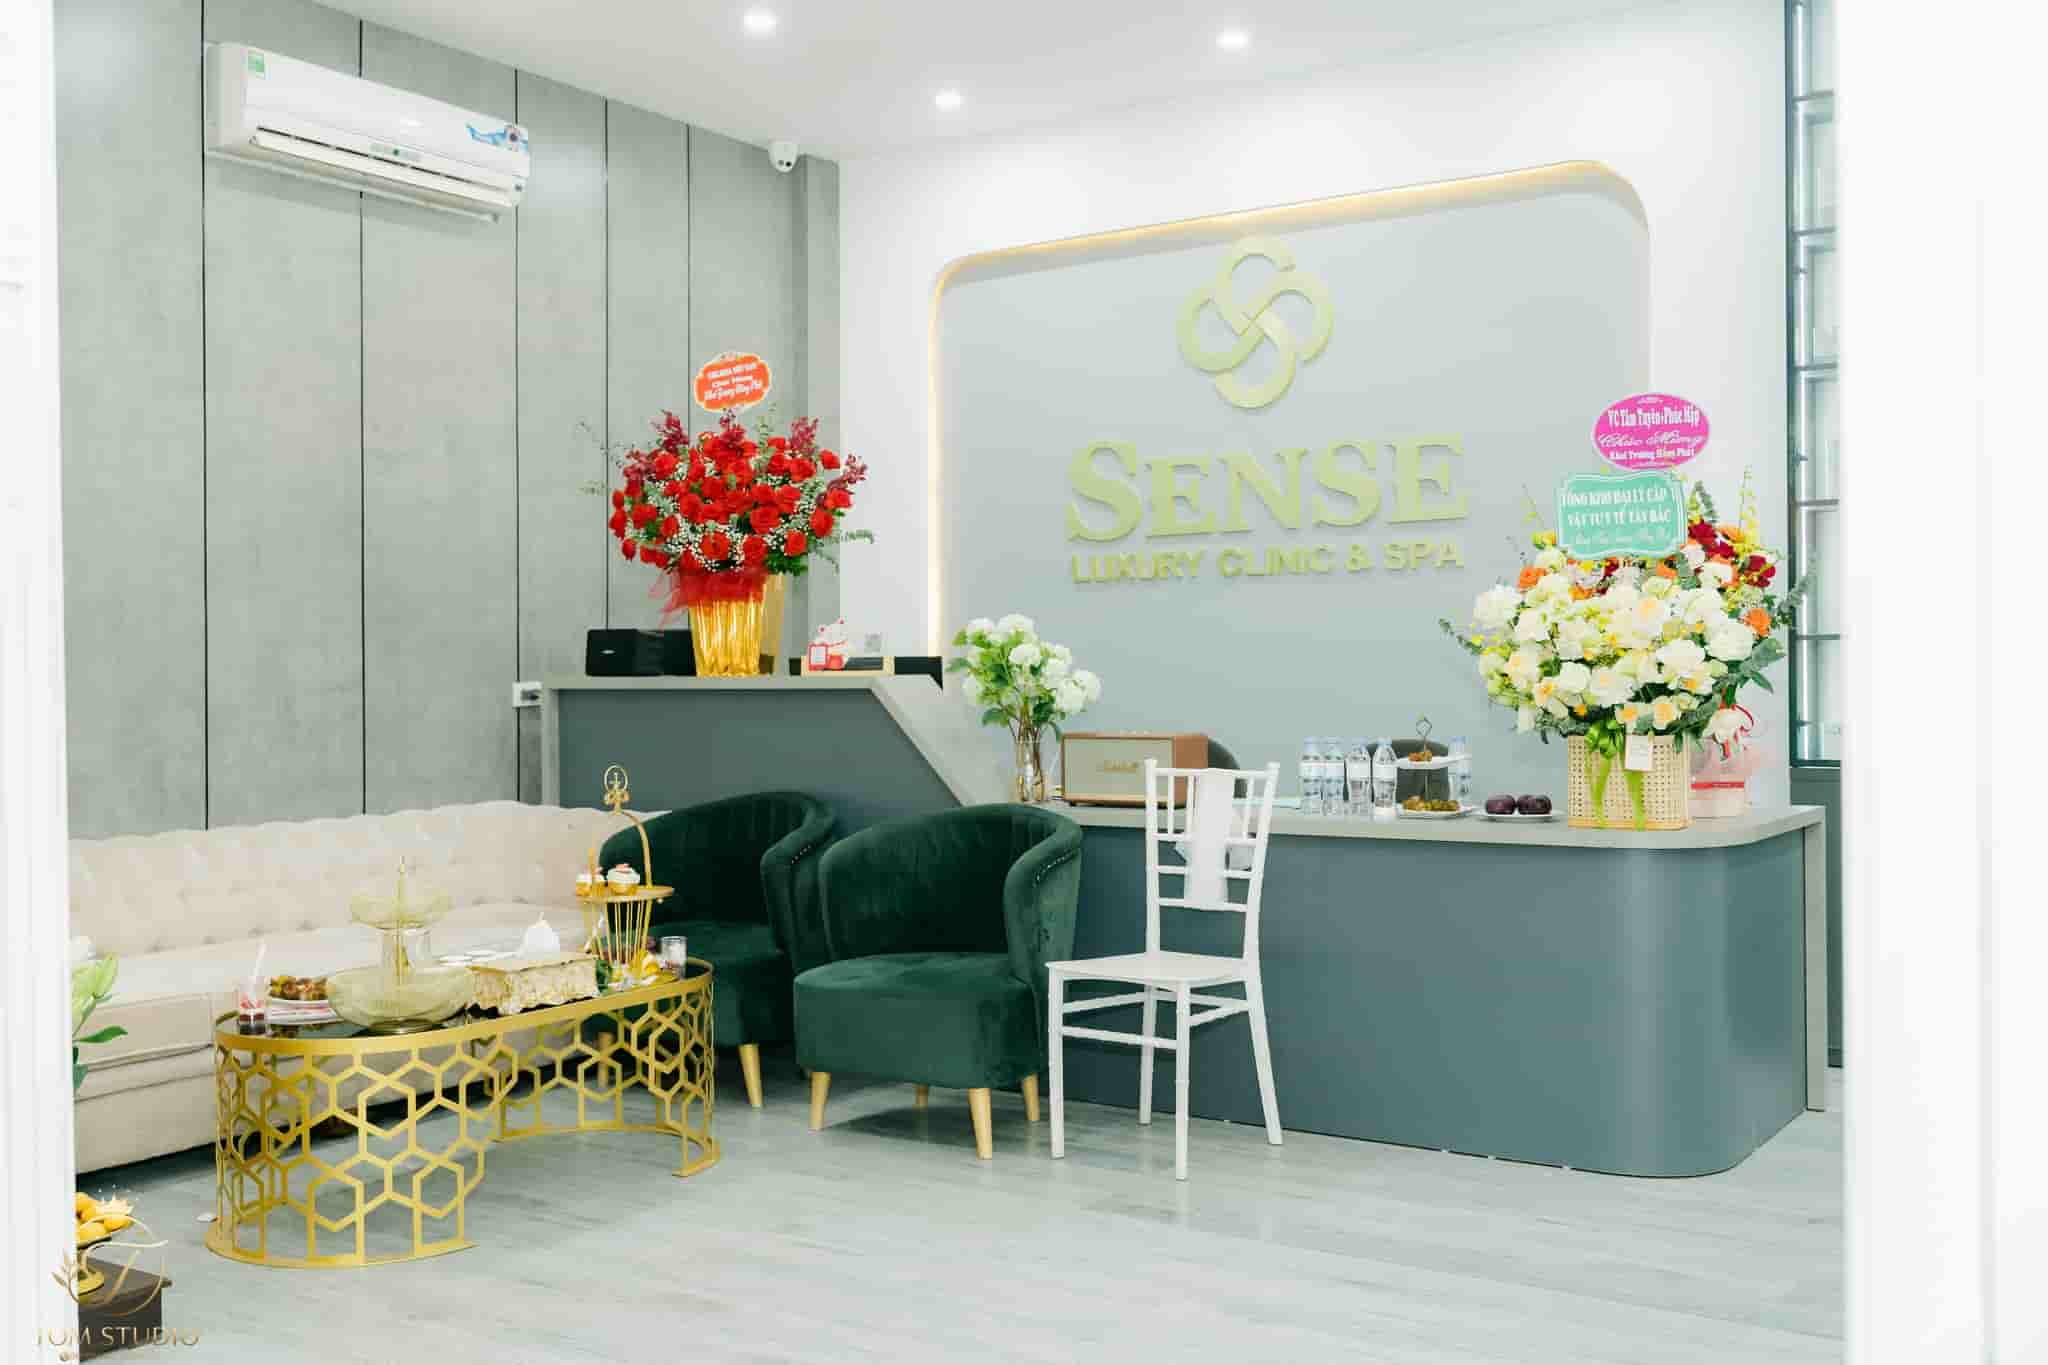 Sense Luxury Clinic & Spa